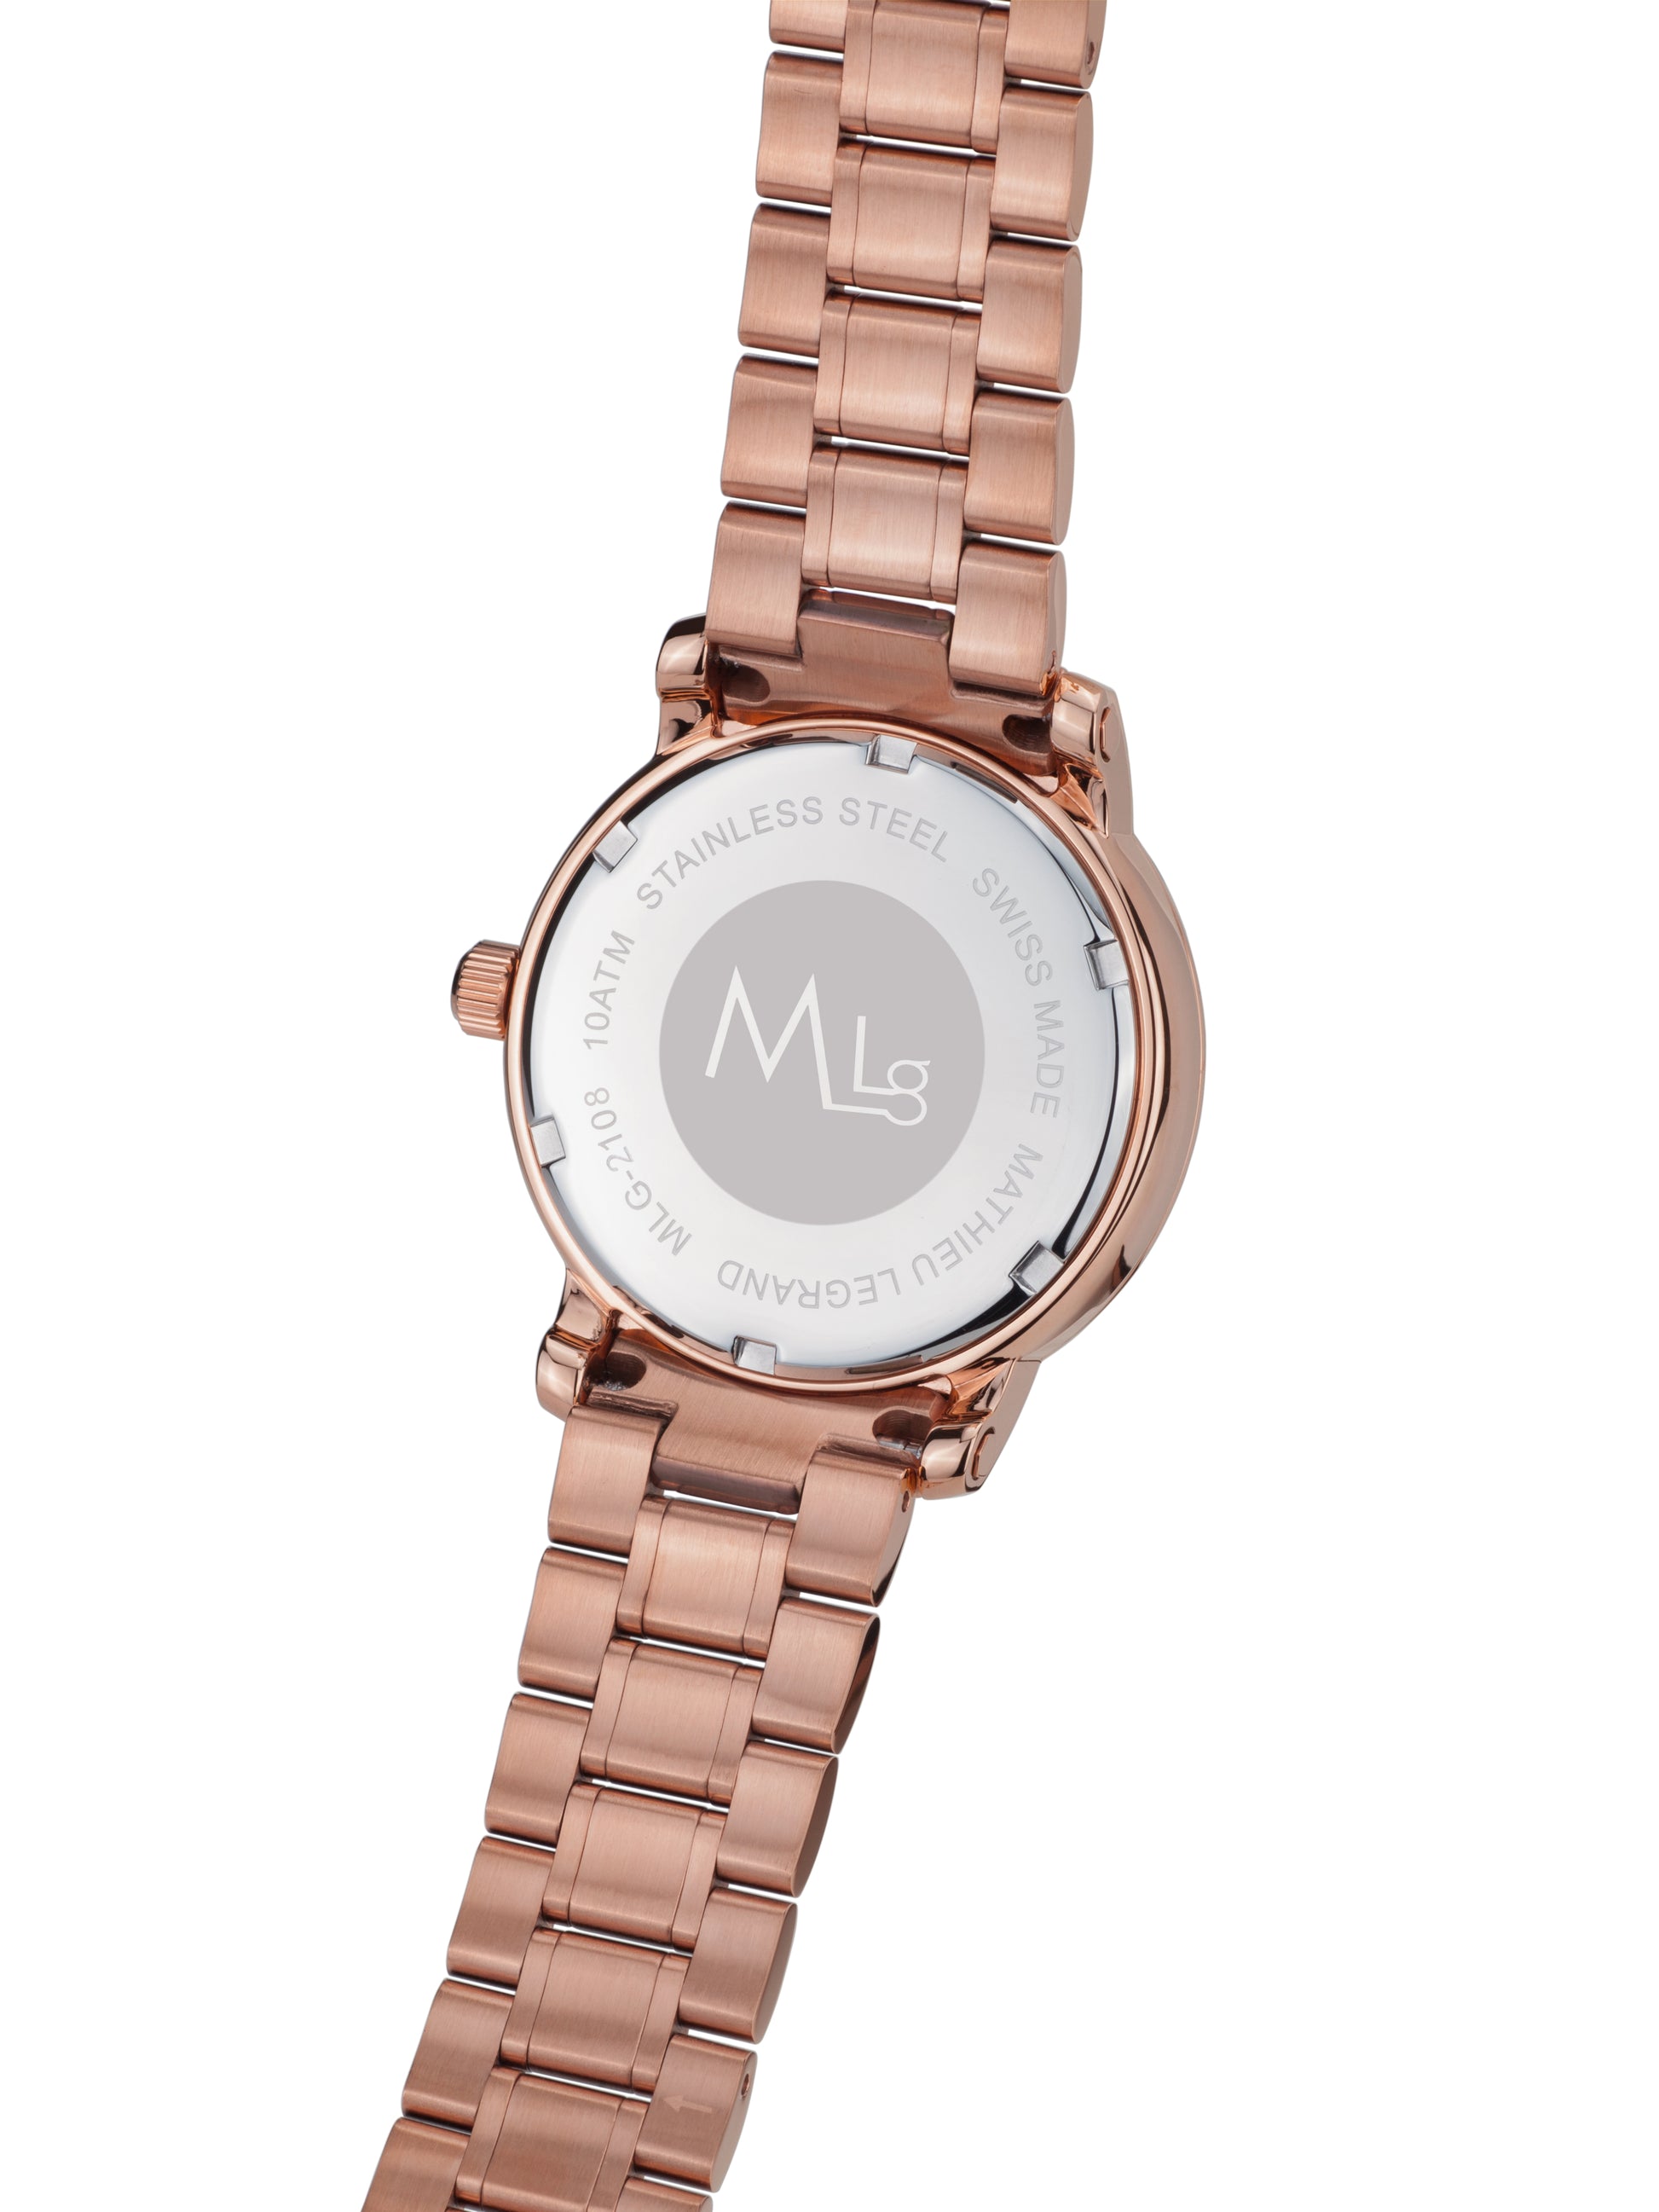 Automatic watches — Mille Étoiles — Mathieu Legrand — rosegold IP